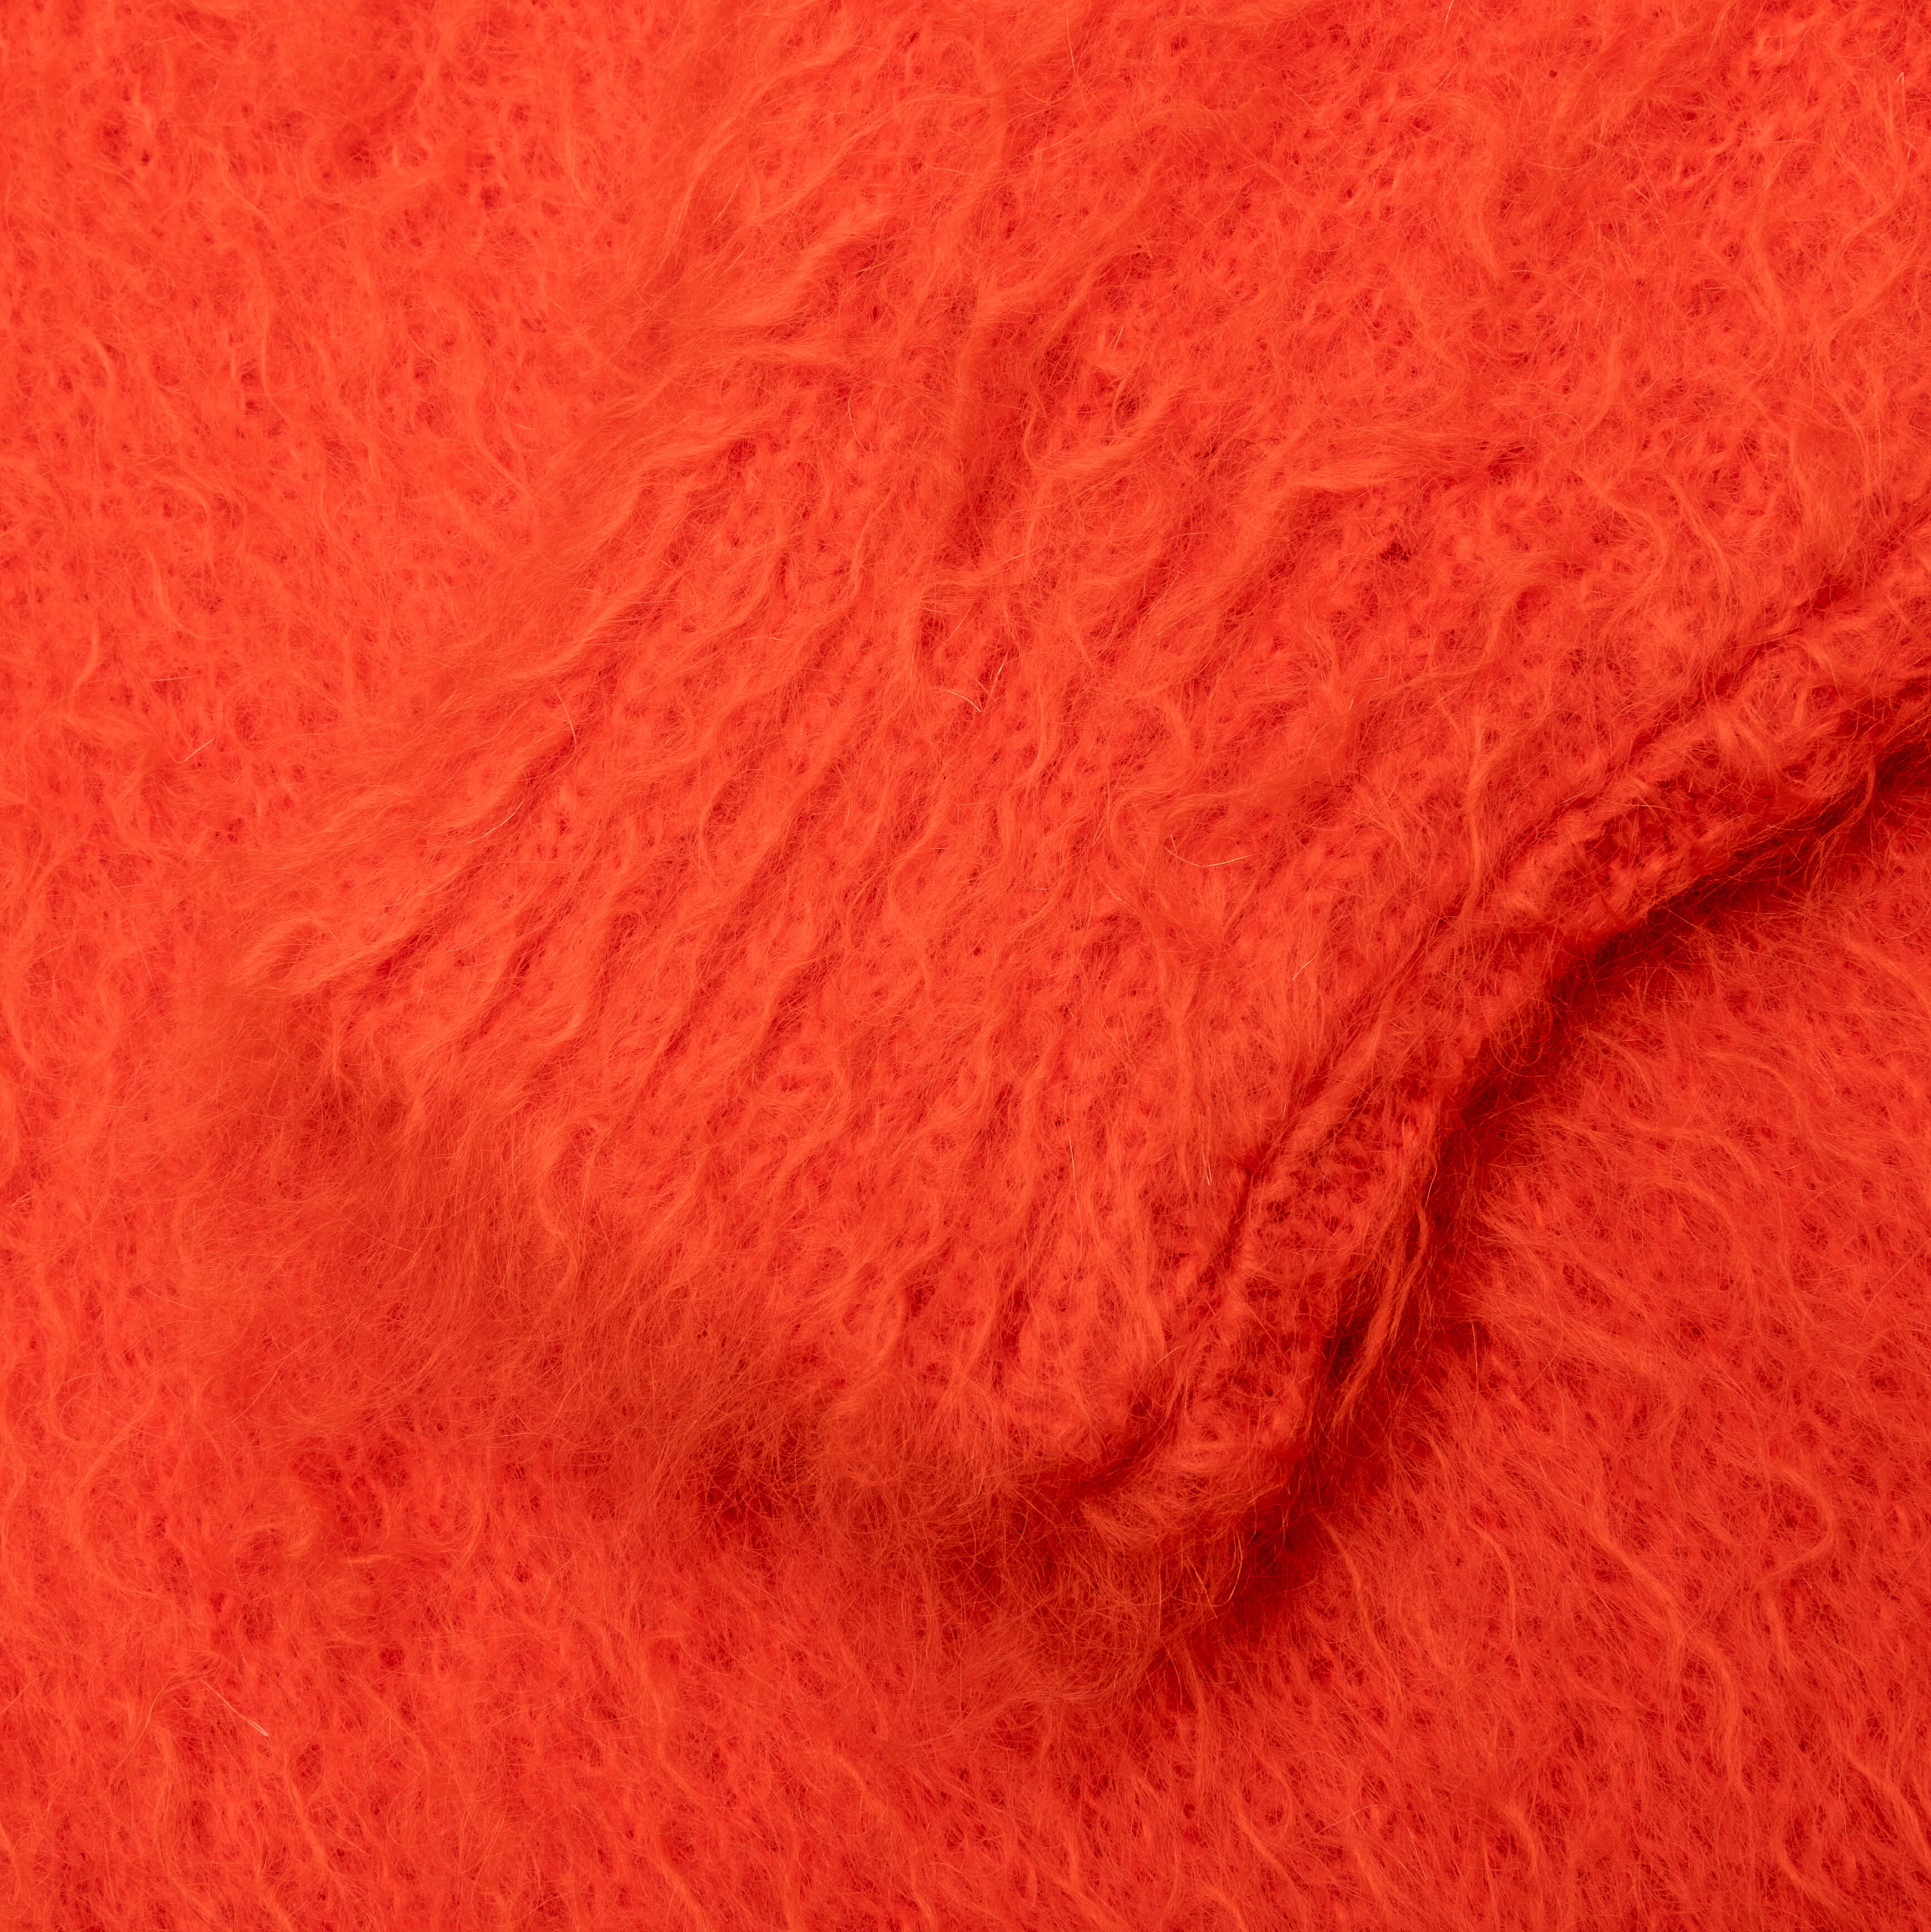 Crewneck Sweater - Poppy, , large image number null